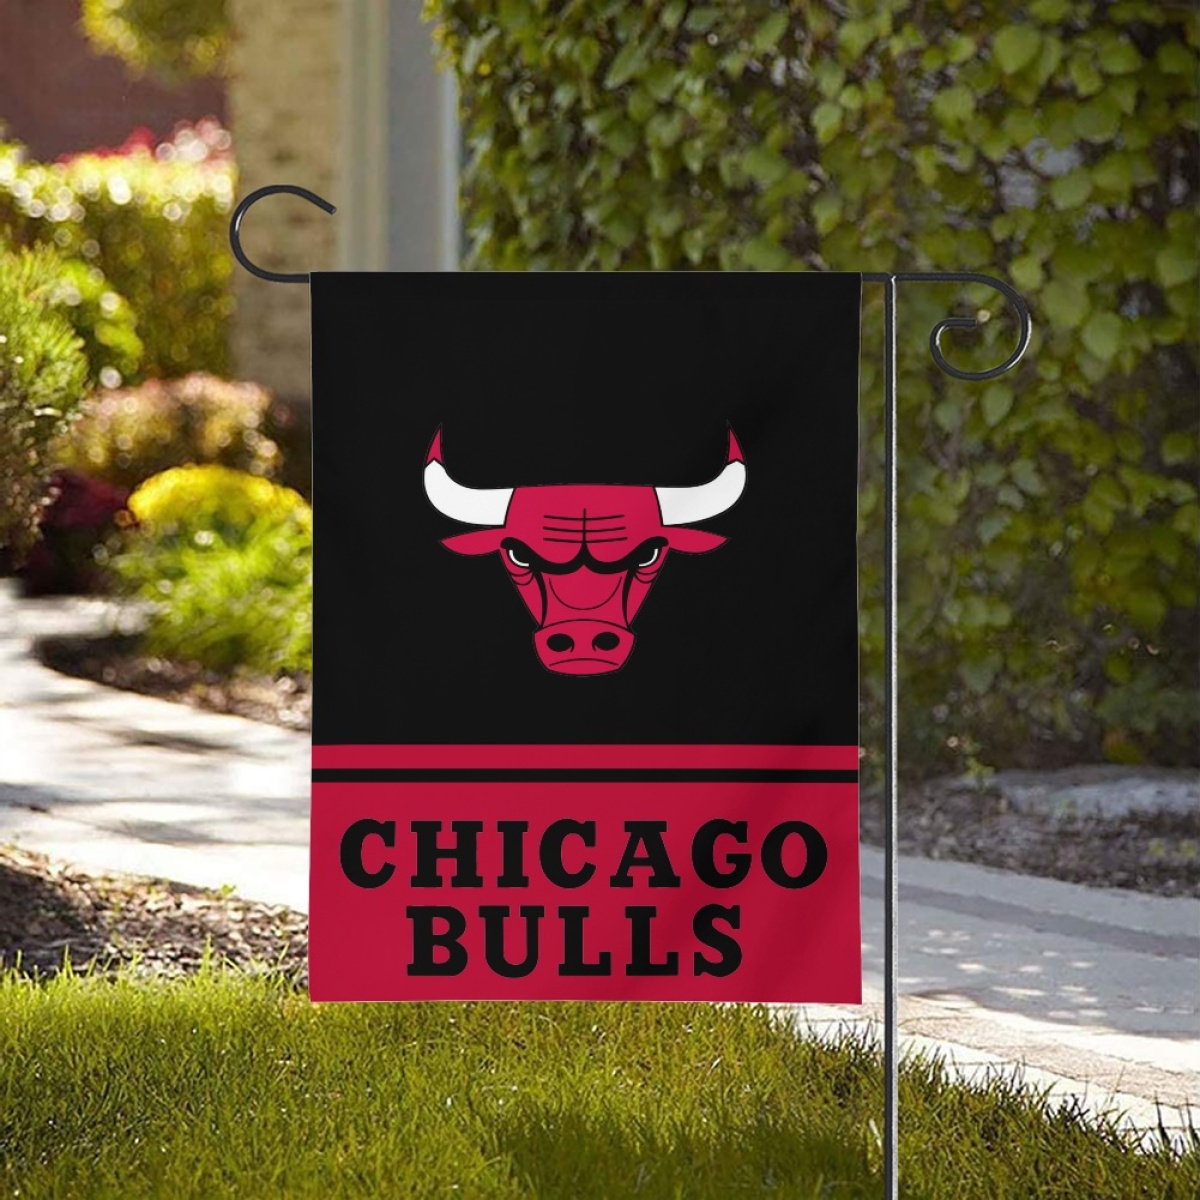 Chicago Bulls Double-Sided Garden Flag 001 (Pls check description for details)